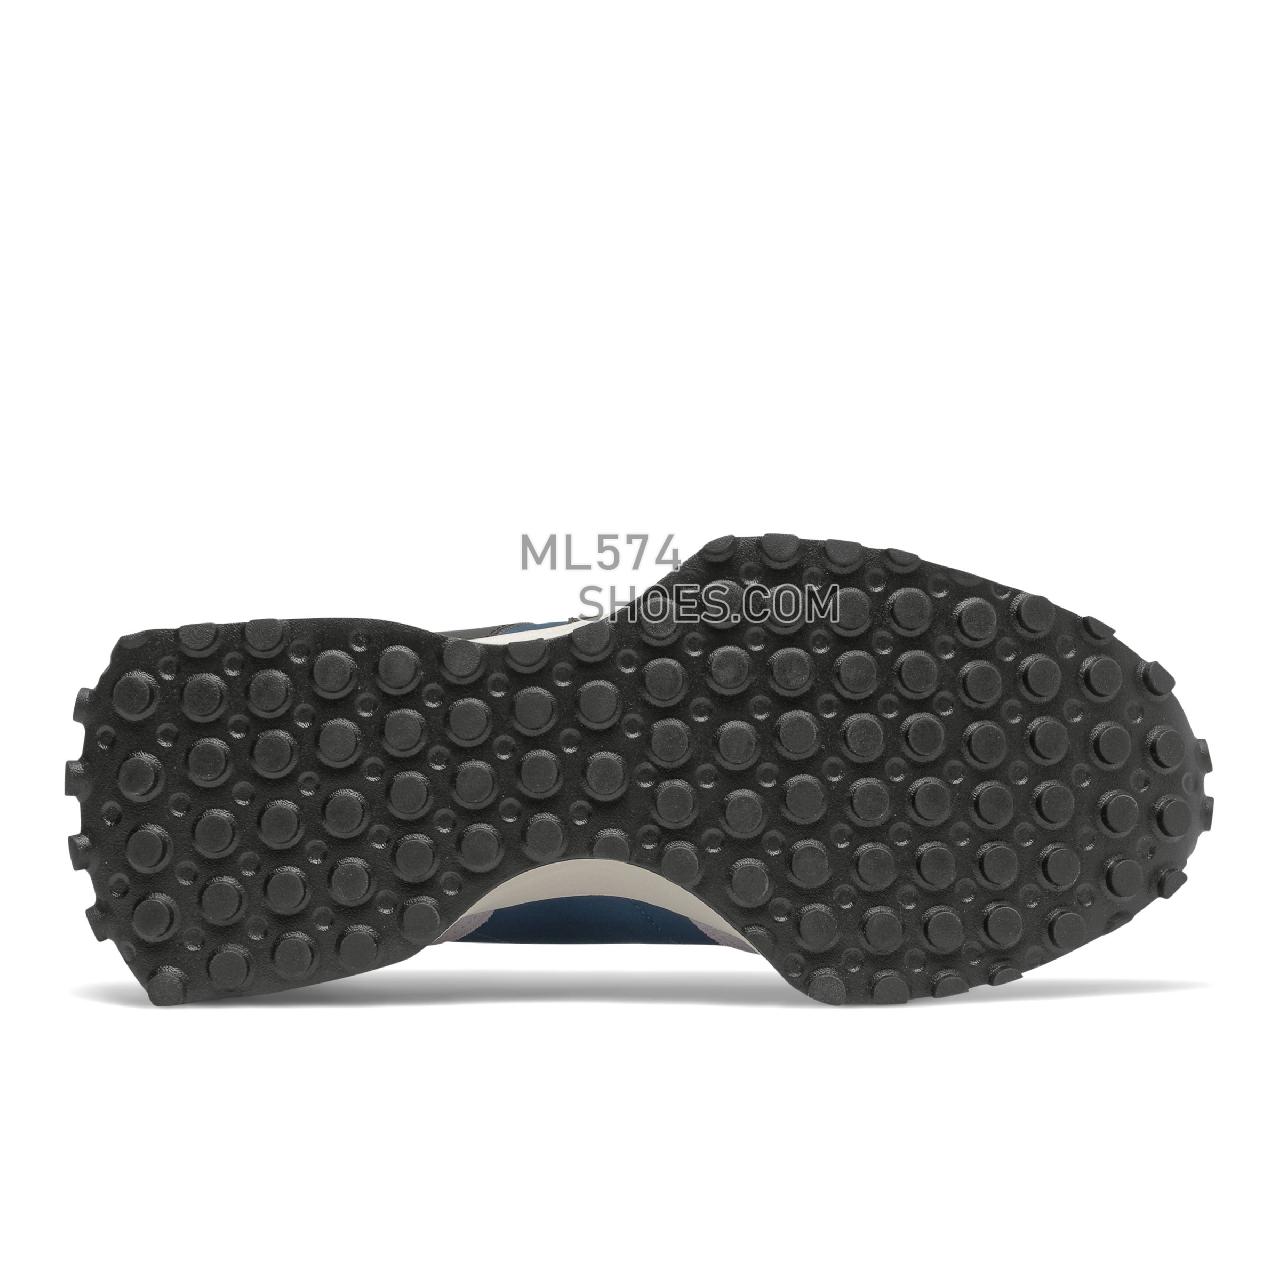 New Balance 327 - Unisex Men's Women's Sport Style Sneakers - Rain Cloud with Black - MS327LU1